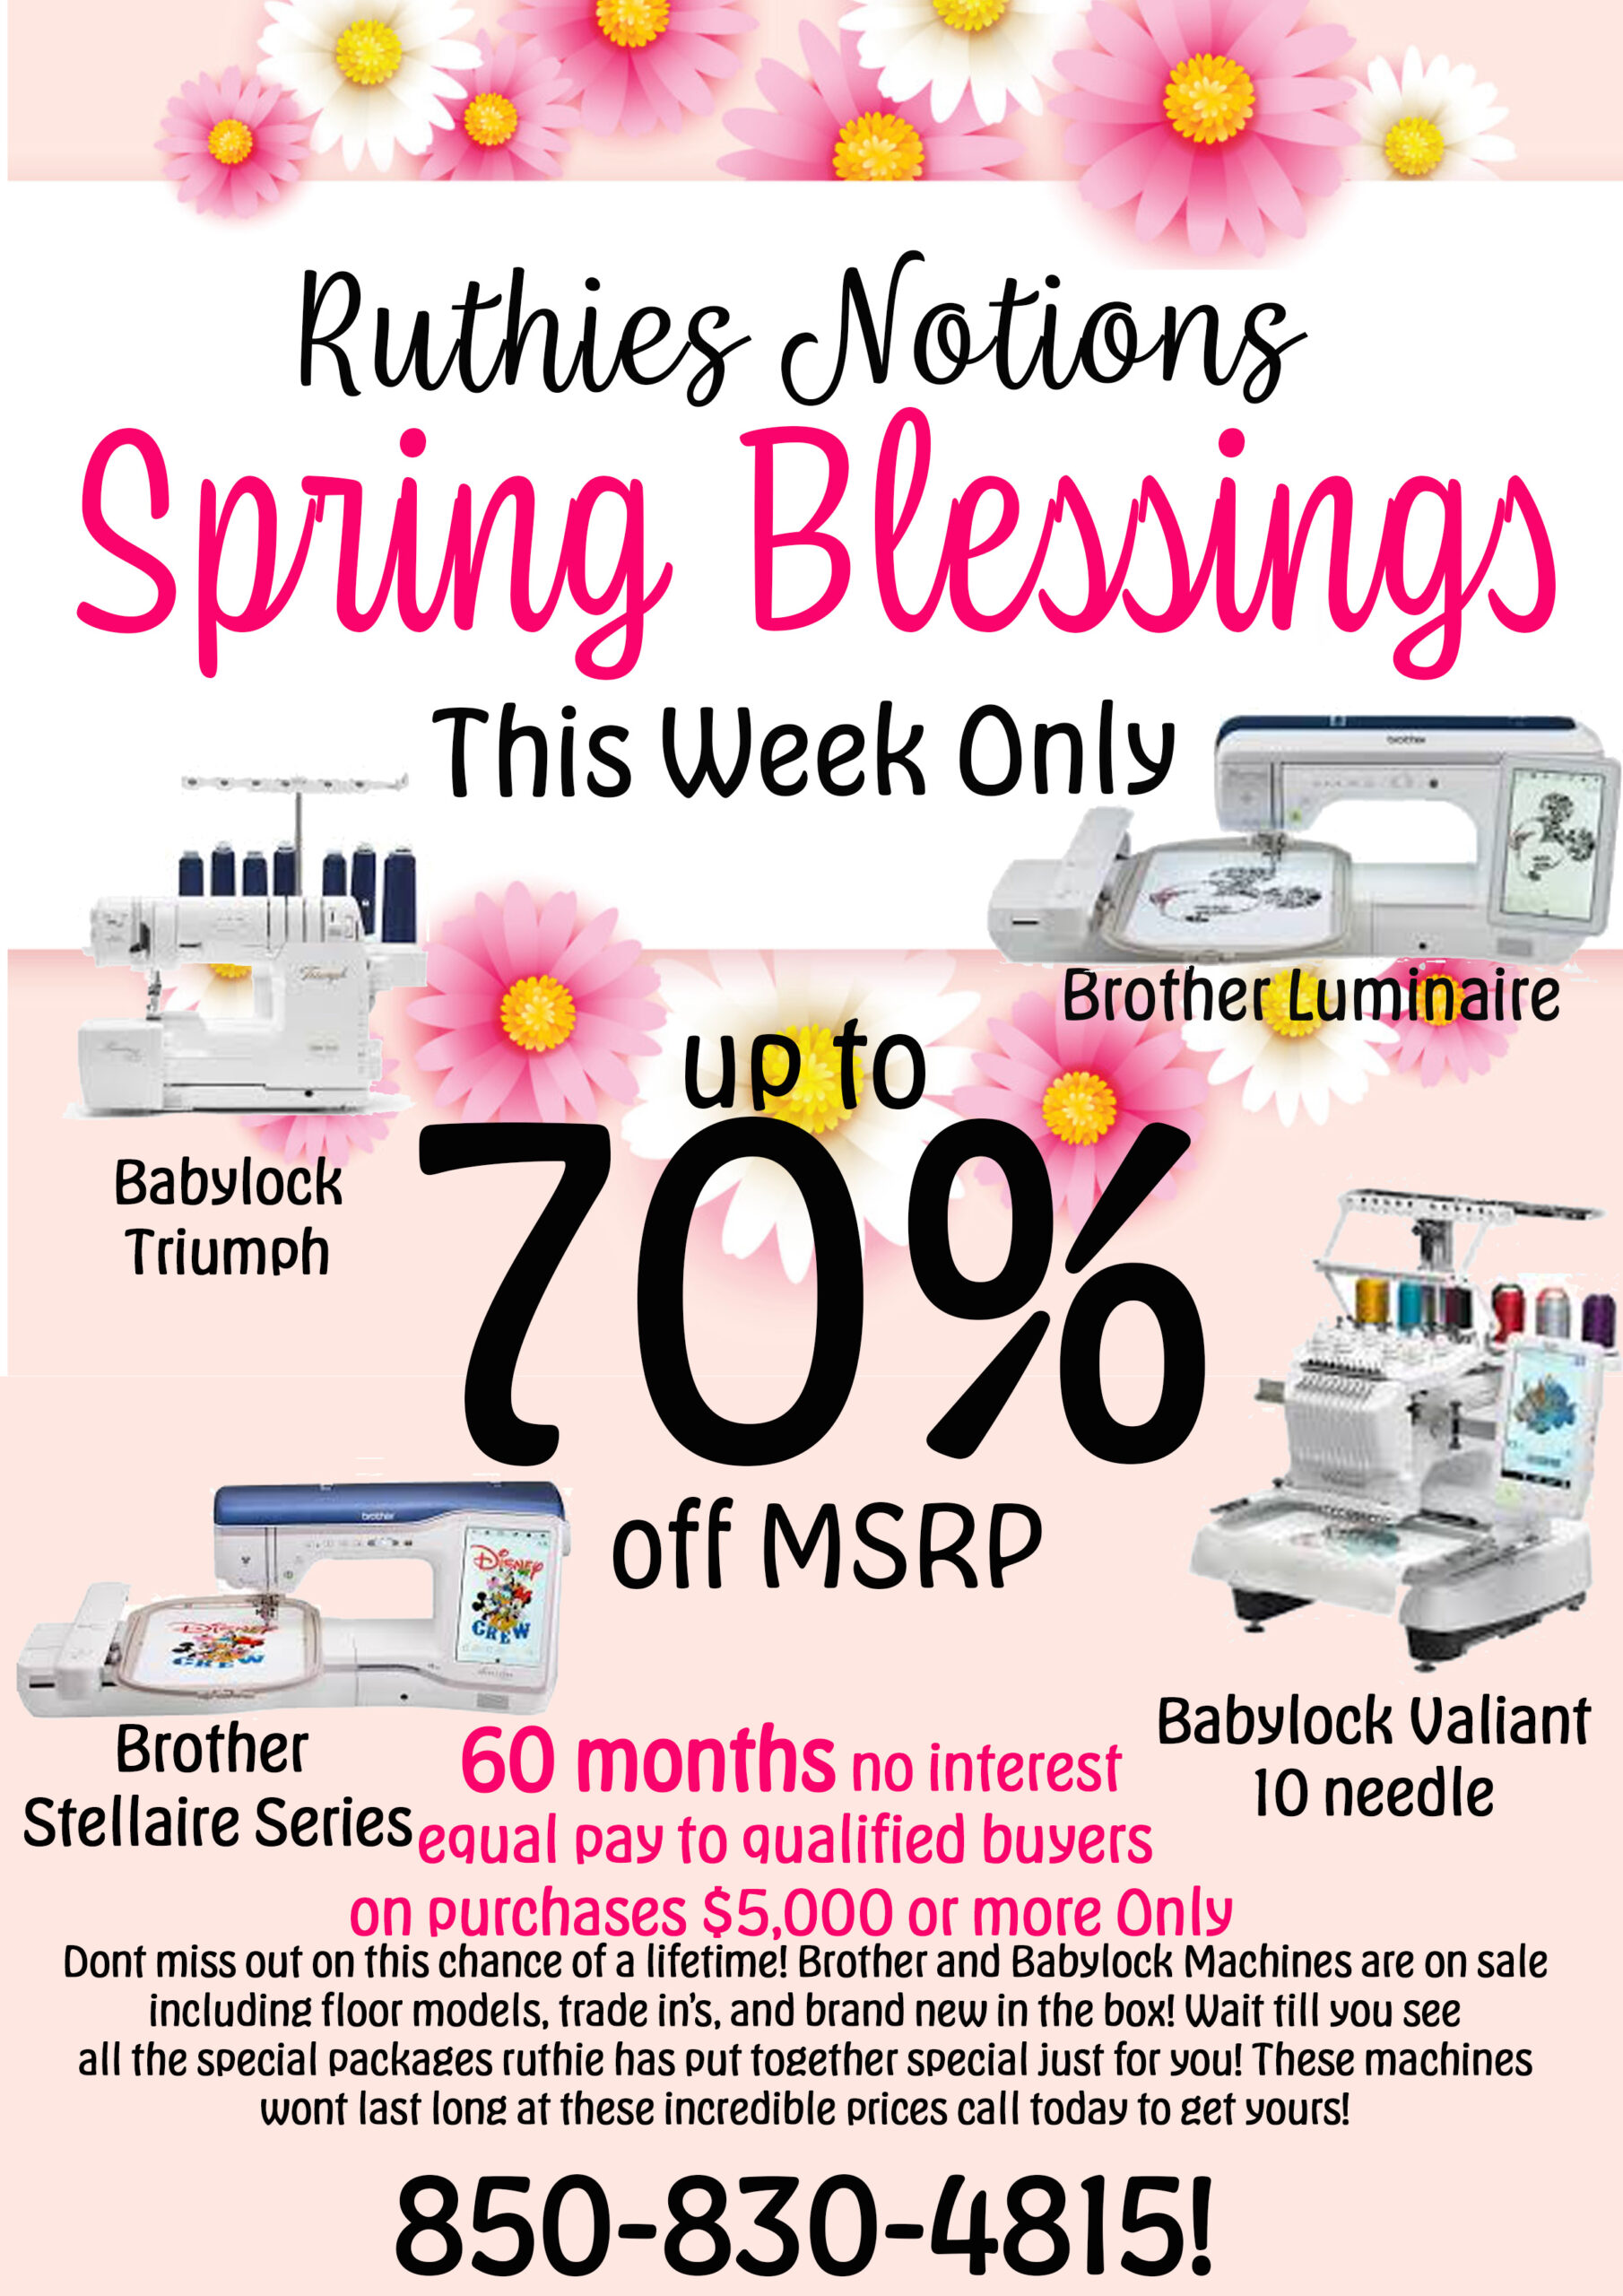 Spring Blessings April at ruthies